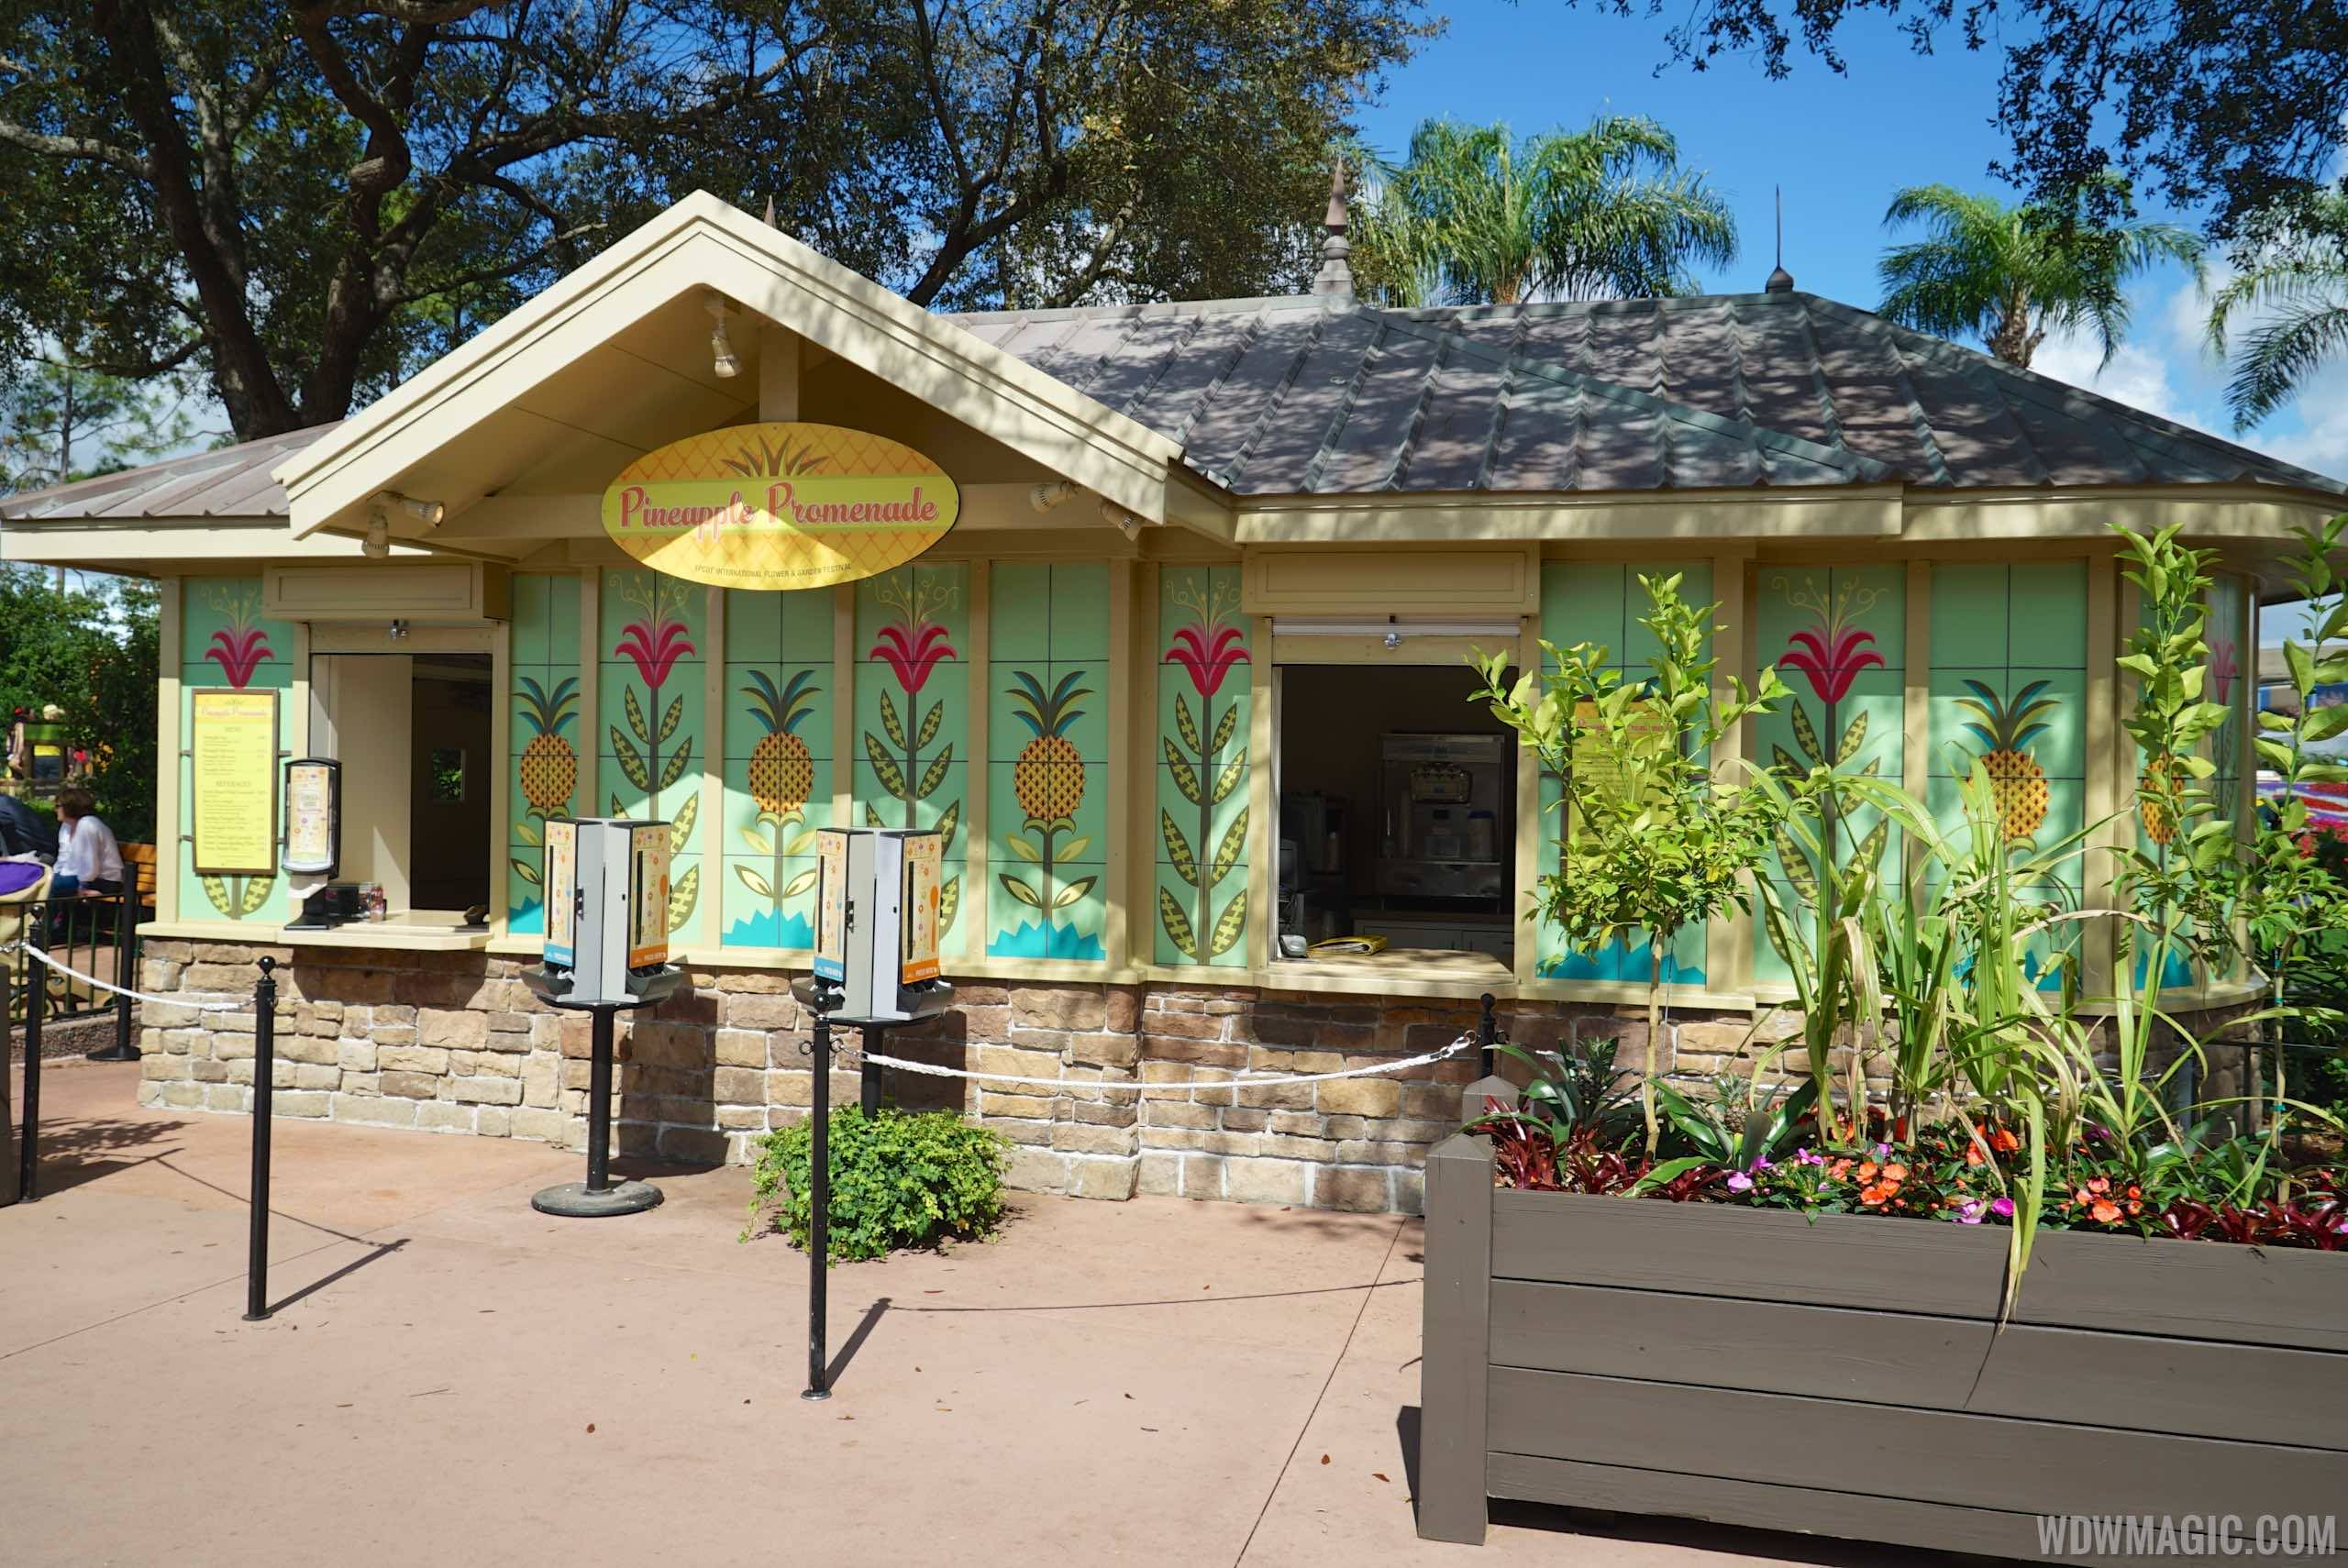 2015 Epcot Flower and Garden Festival Outdoor Kitchen - Pineapple Promenade kiosk